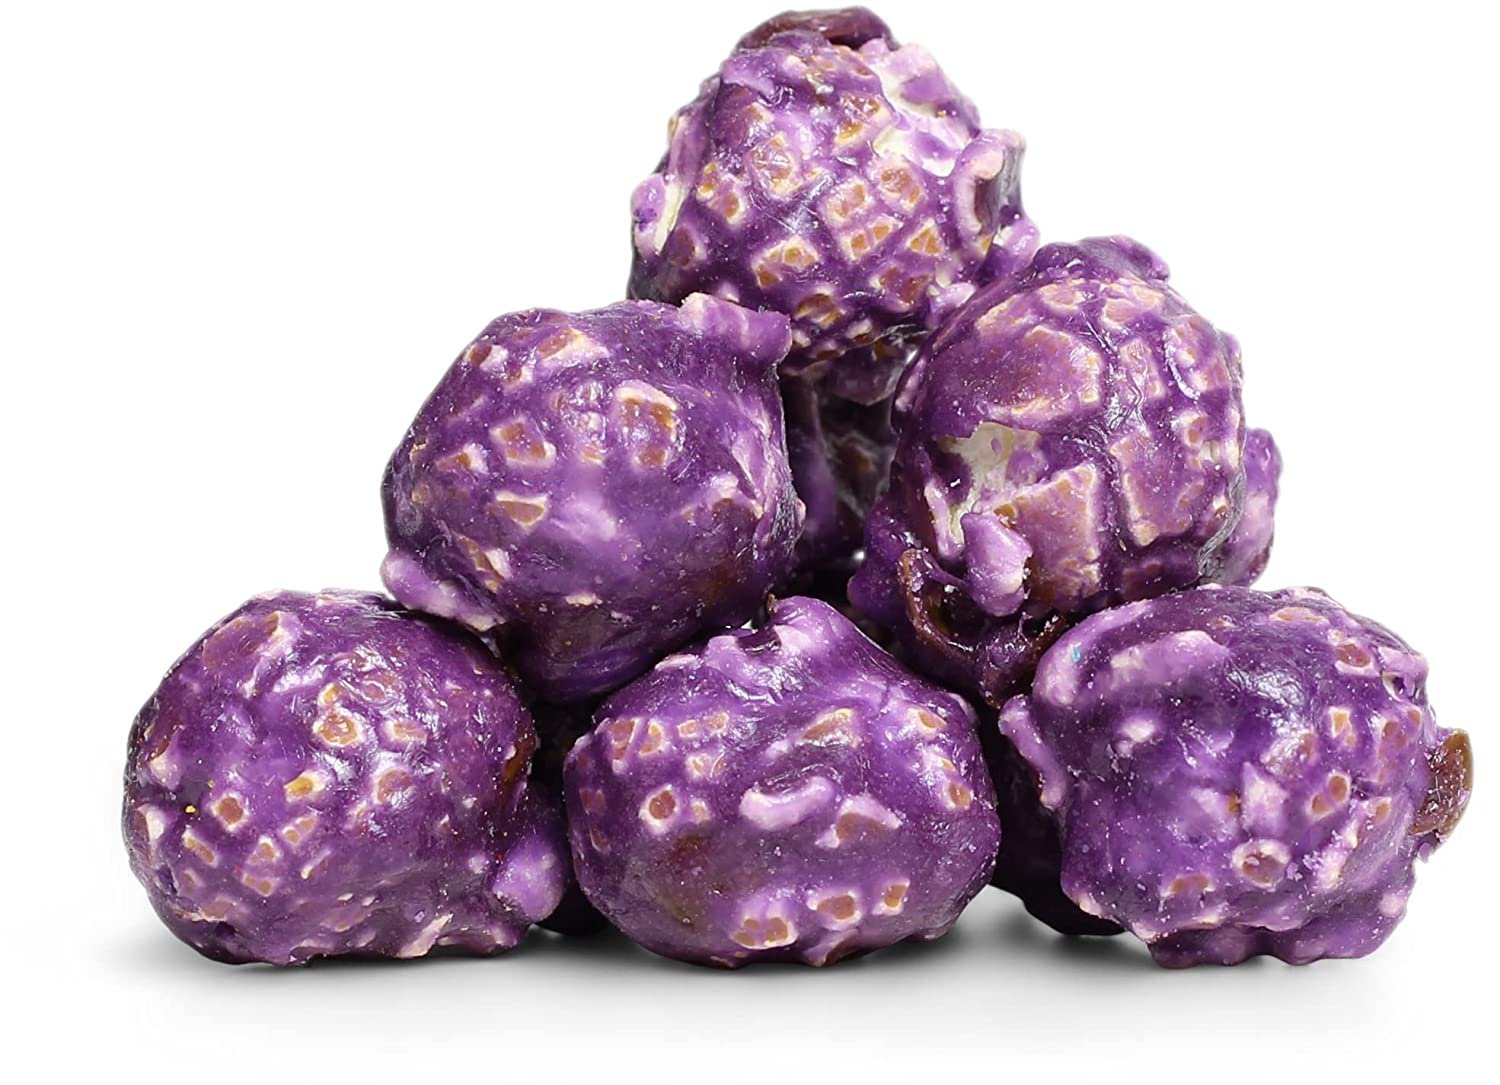 Purple Grape Flavored Popcorn